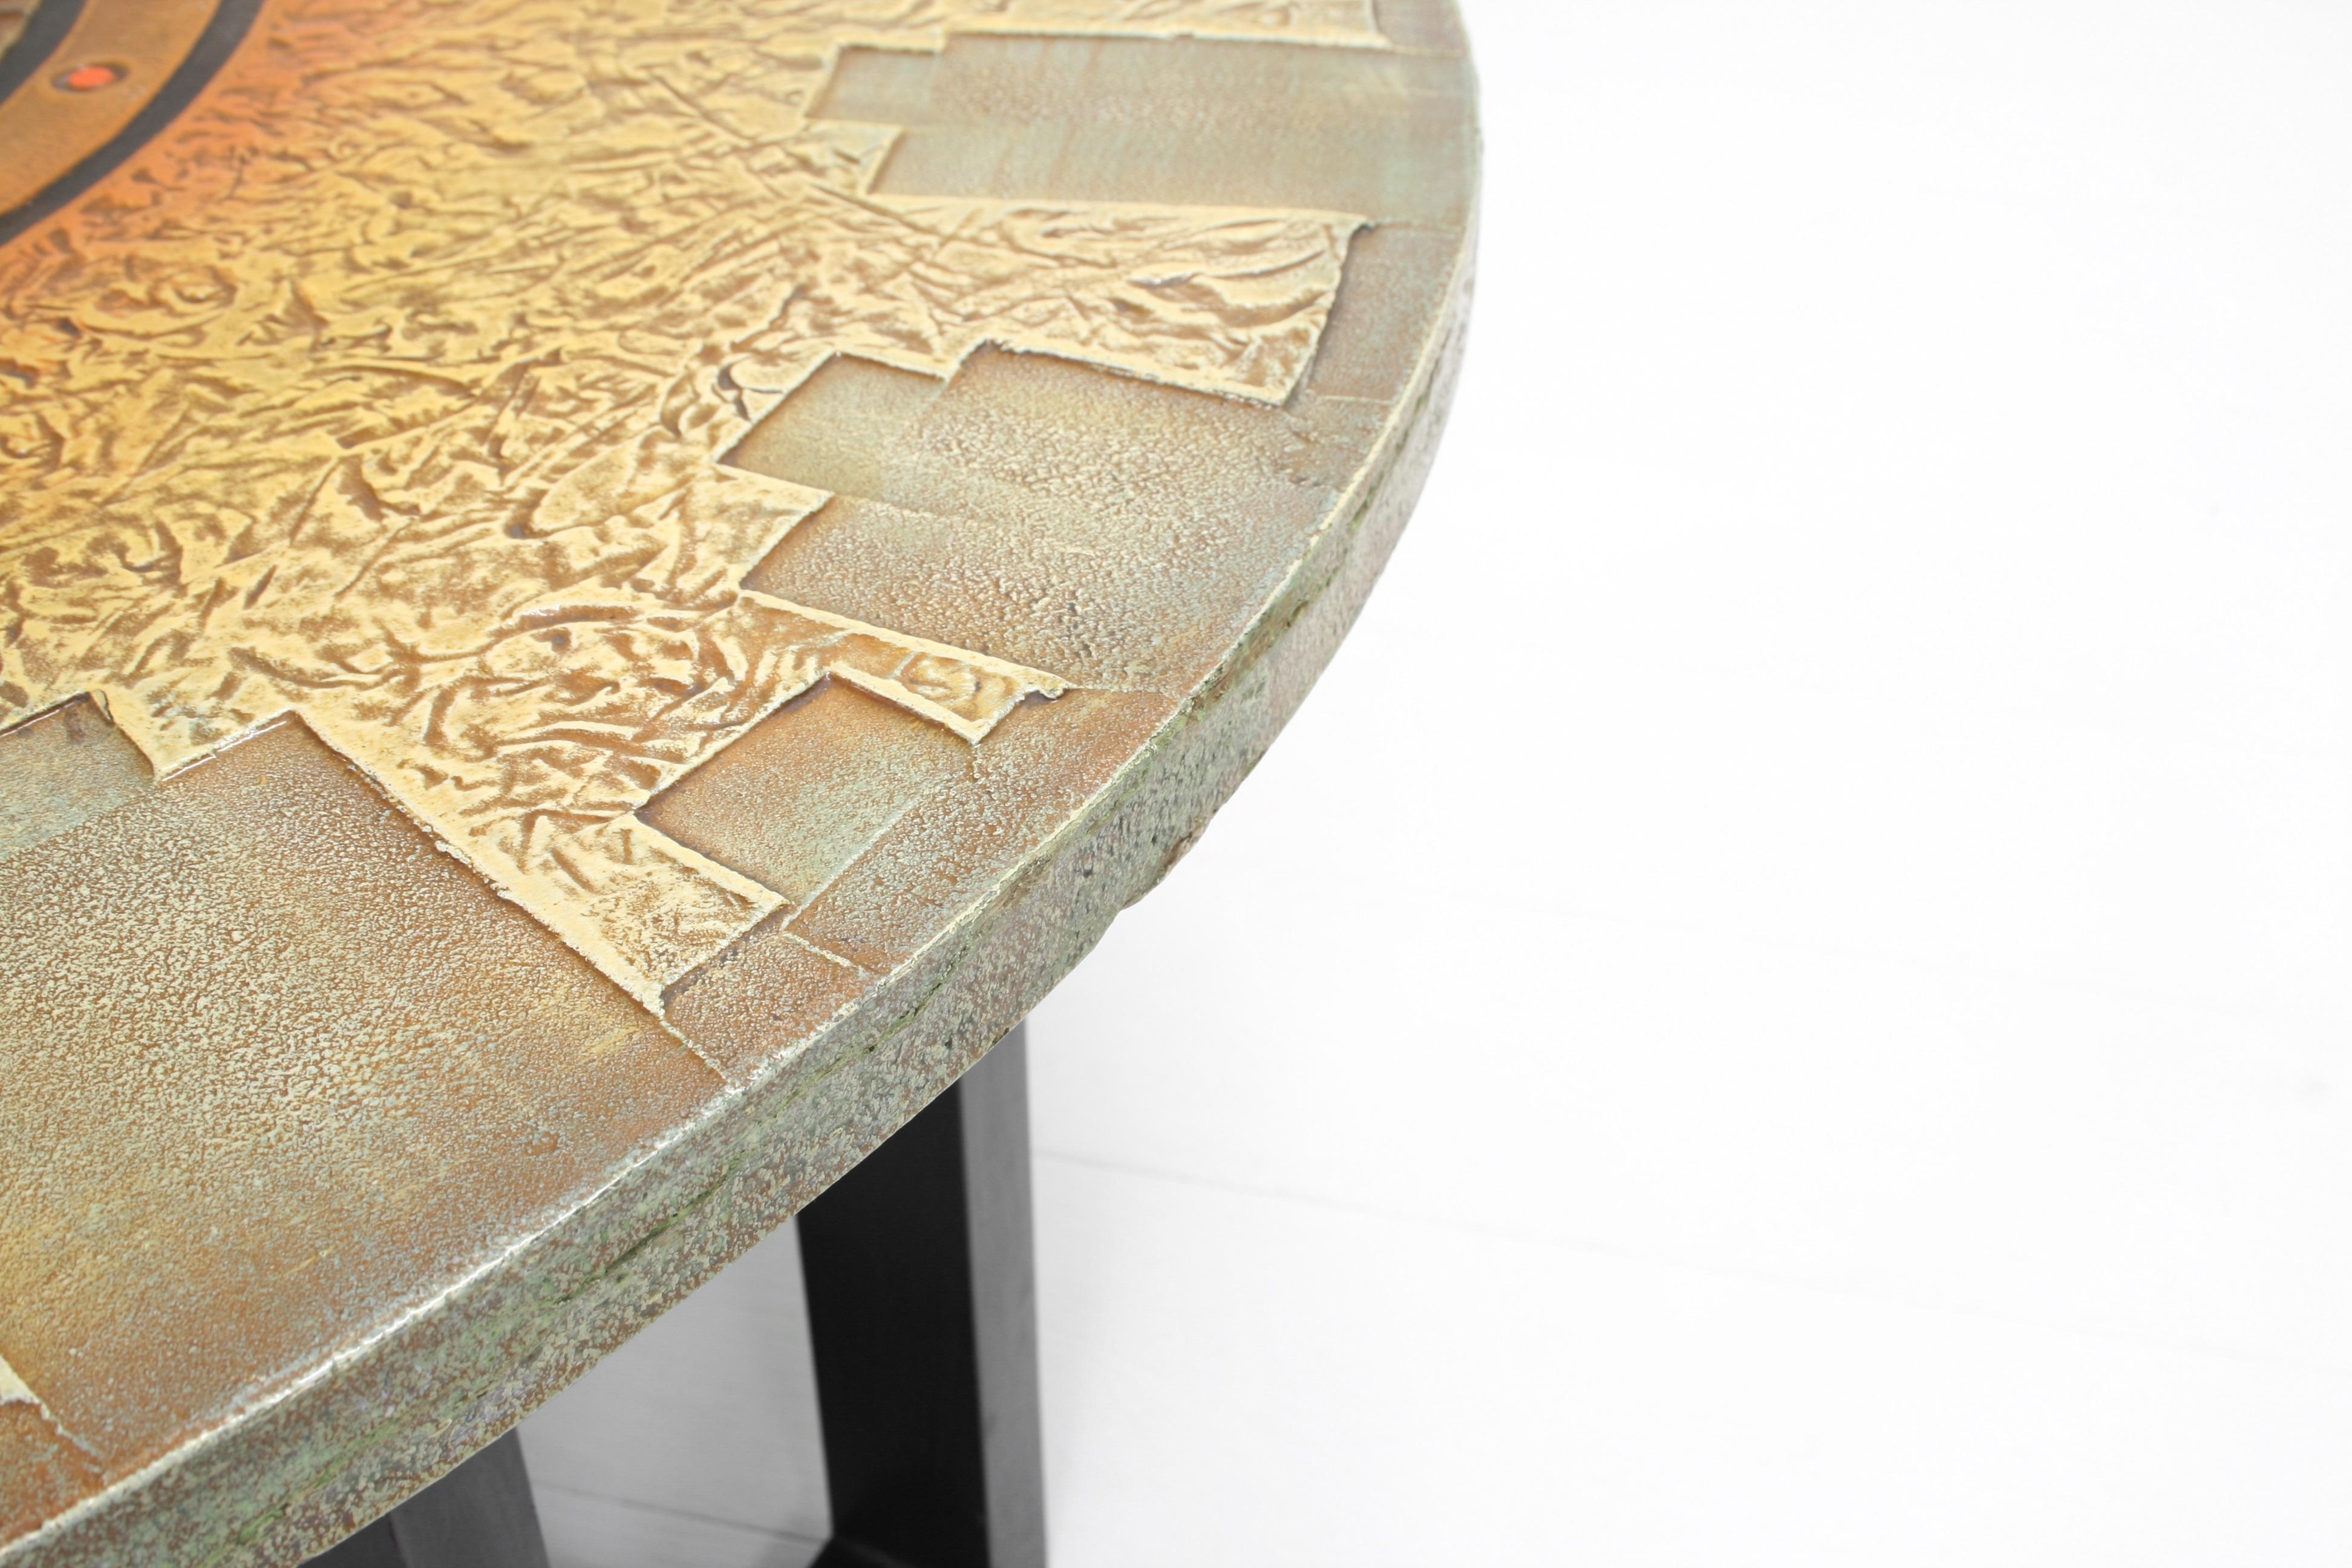 Plaster Aztec Relief Art Sunburst Coffee Table by DK